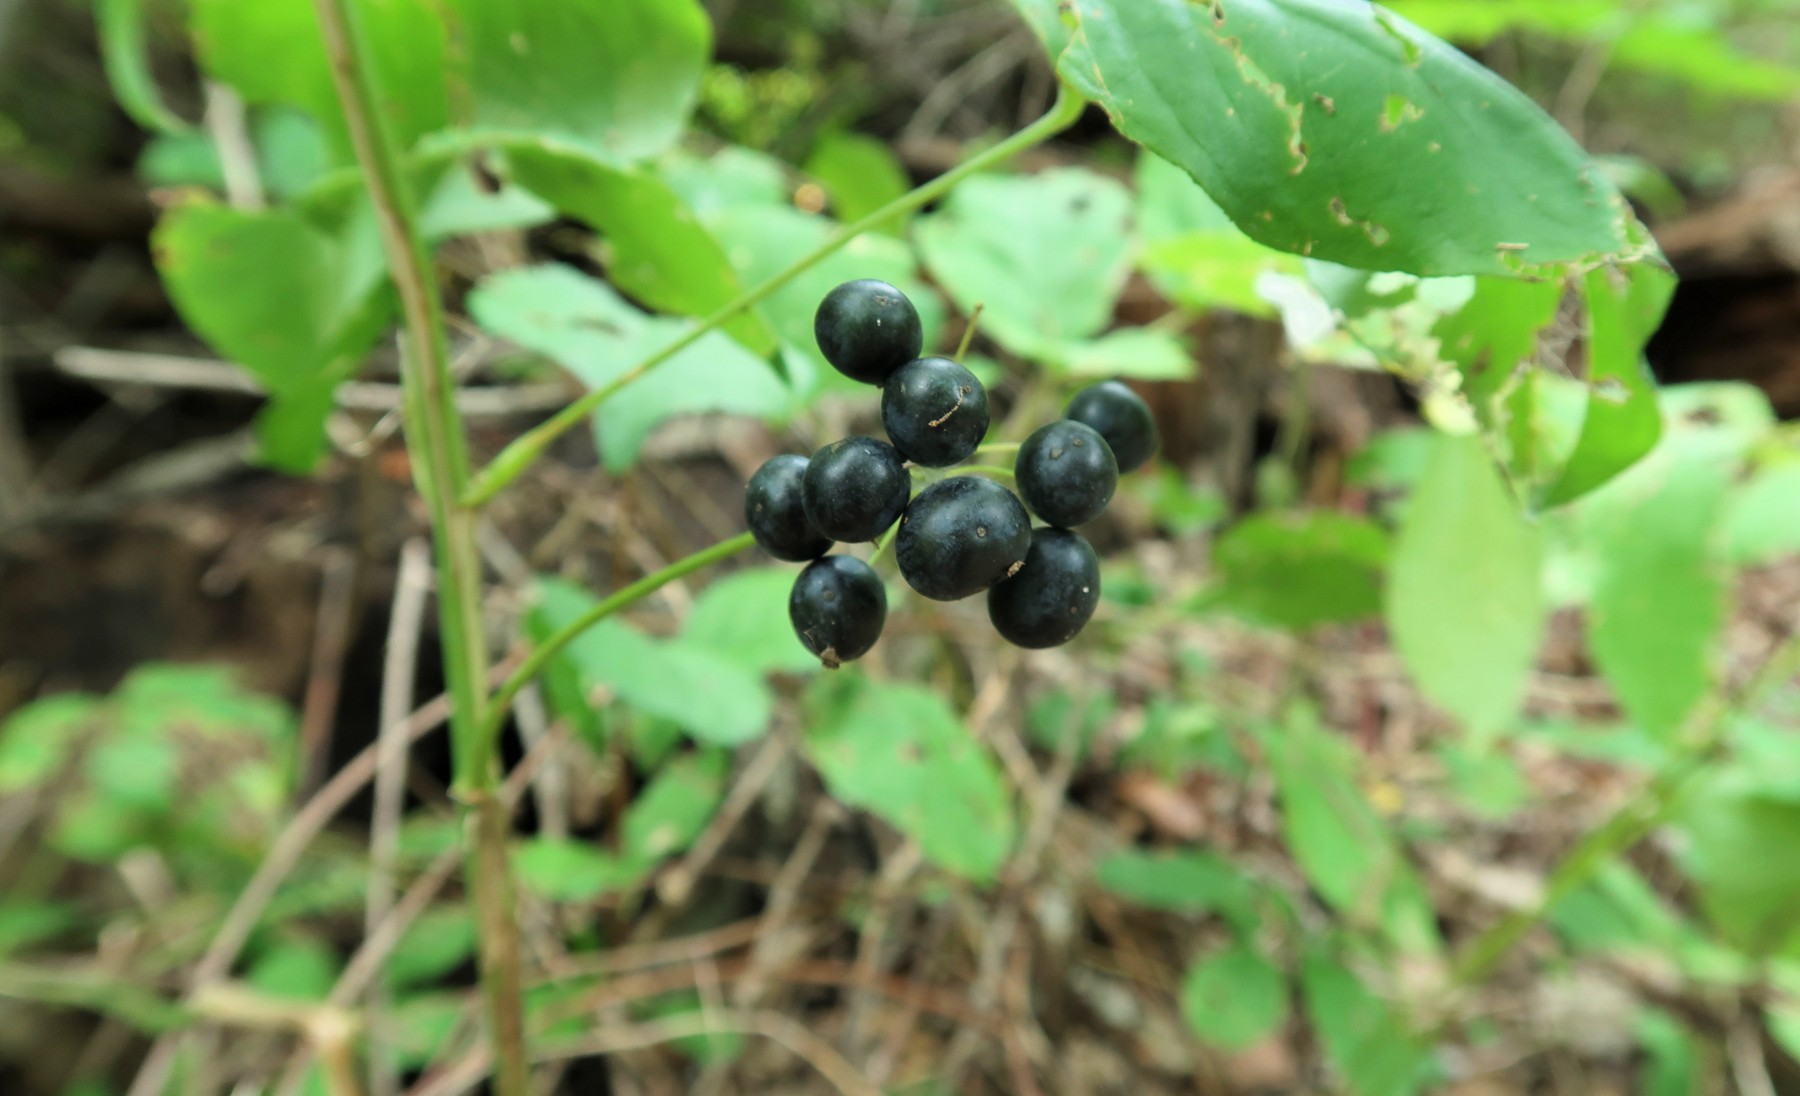 202009151351003 Smooth Carrionflower (Smilax herbacea) blue berries - Bald Mountain RA, Oakland Co, MI.JPG